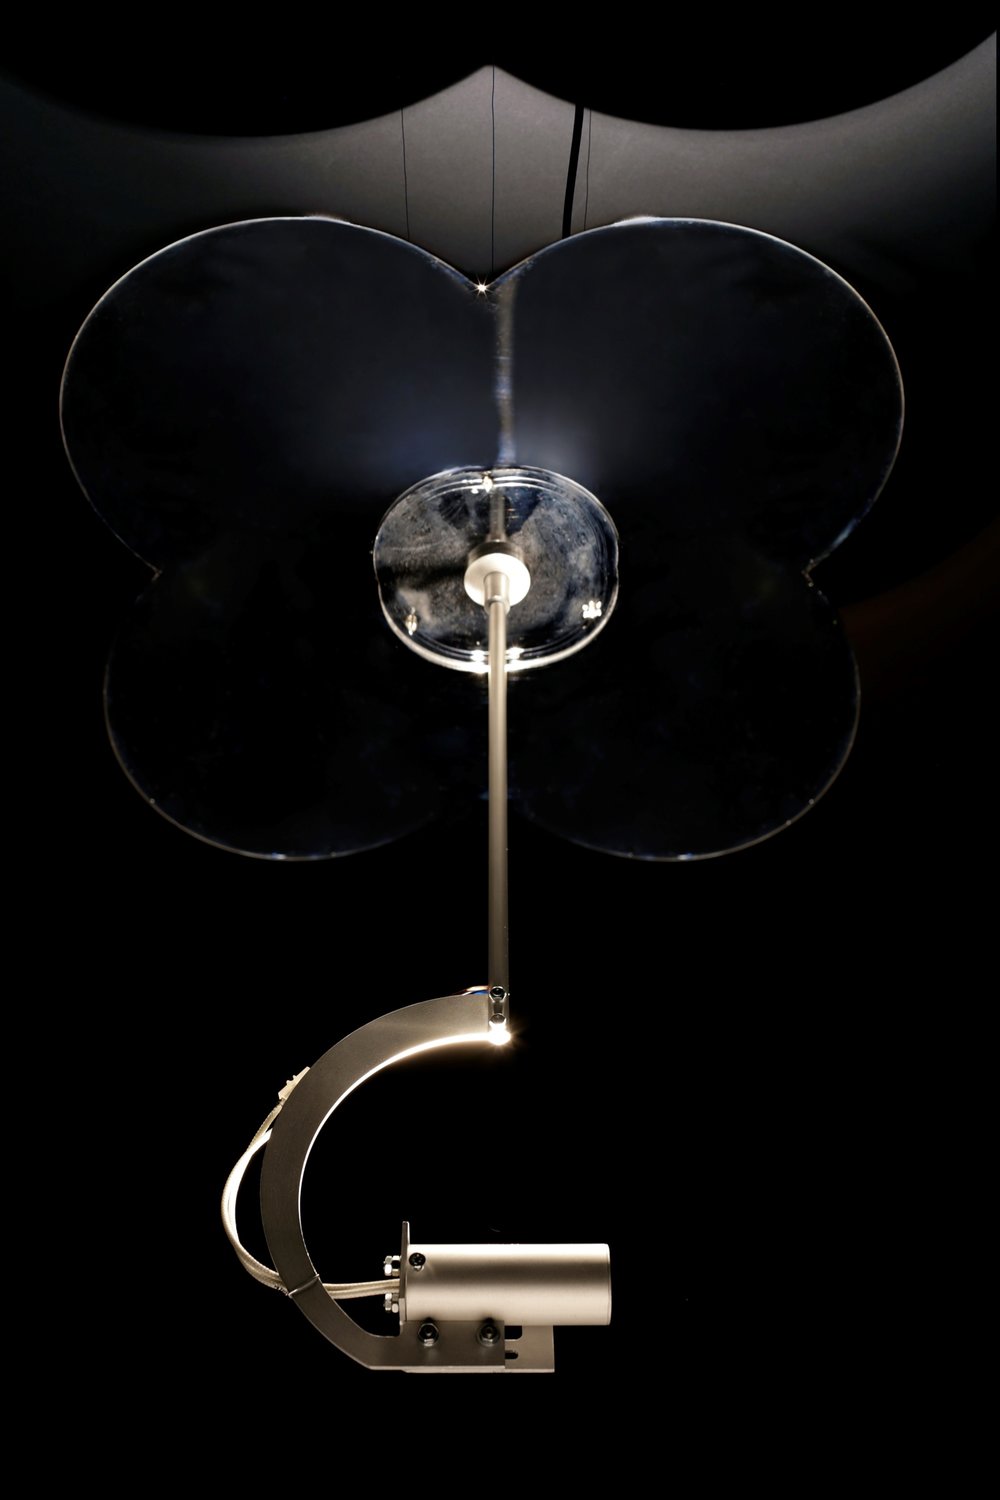 A kör négyszögesítése / Squaring the Circle, 2012. light sculpture, 3-dimensional chrome plated aluminium mirror, halogen lamp, transformer, fibreglass circle, 160 x 40 x 40 cm, Ed. of 3. 